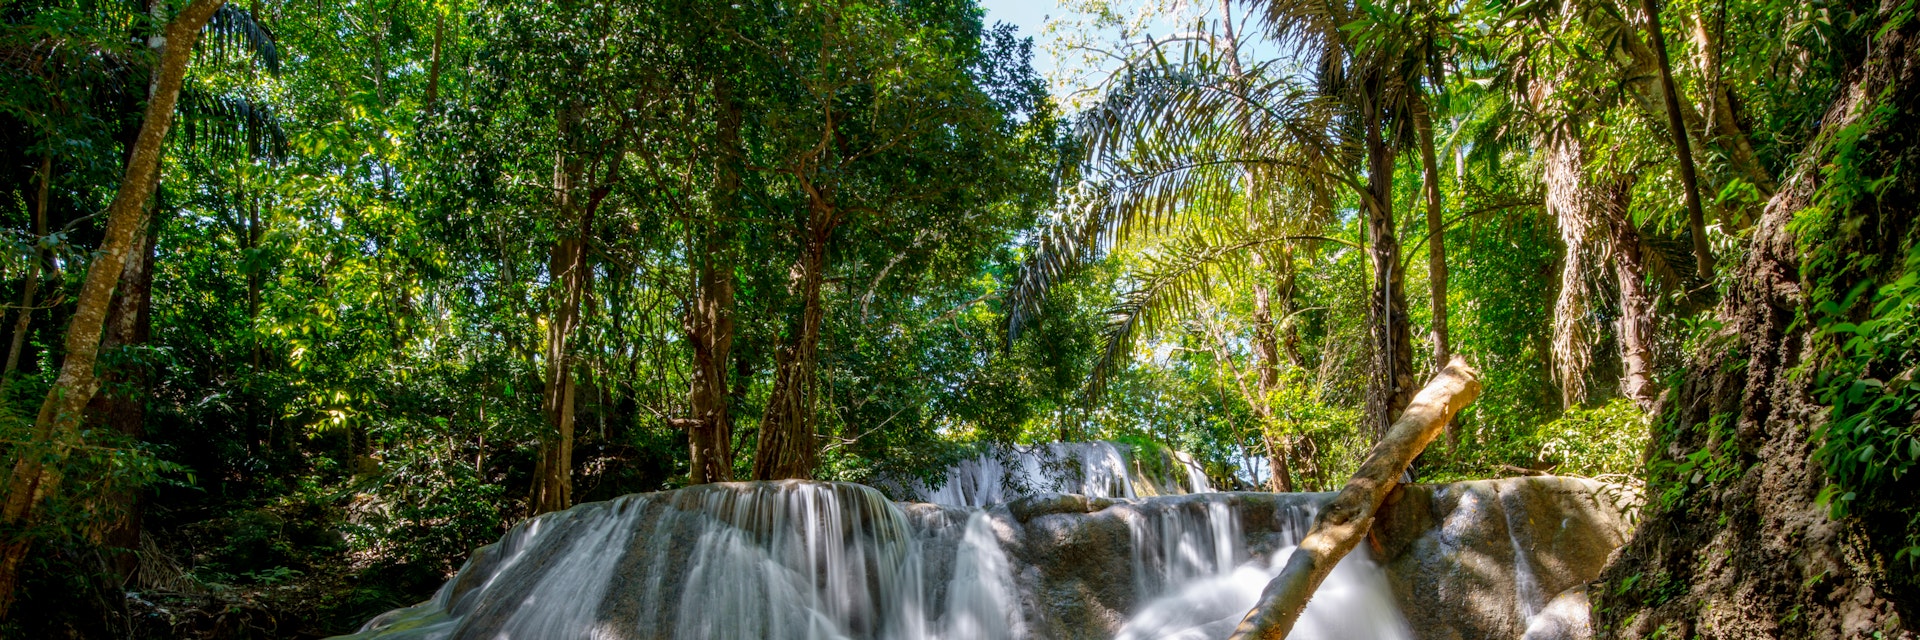 Oenesu Waterfalln West Kupang district of Kupang regency which is part of East Nusa Tenggara province has a stunning natural beauty waterfall; Shutterstock ID 1624143865; your: Erin Lenczycki; gl: 65050; netsuite: Online Editorial; full: Destination